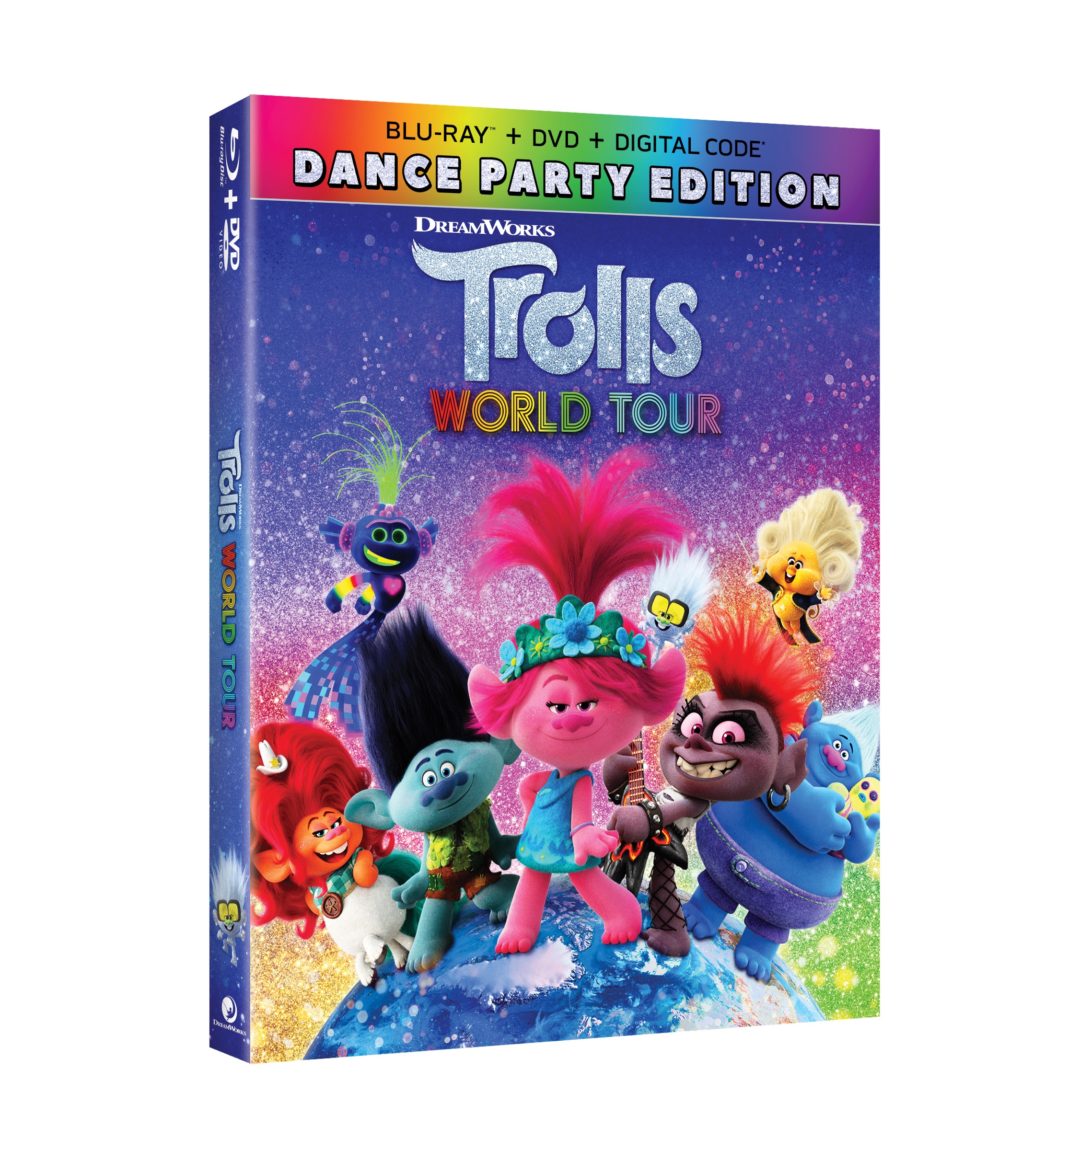 Win TROLLS WORLD TOUR on Blu-Ray